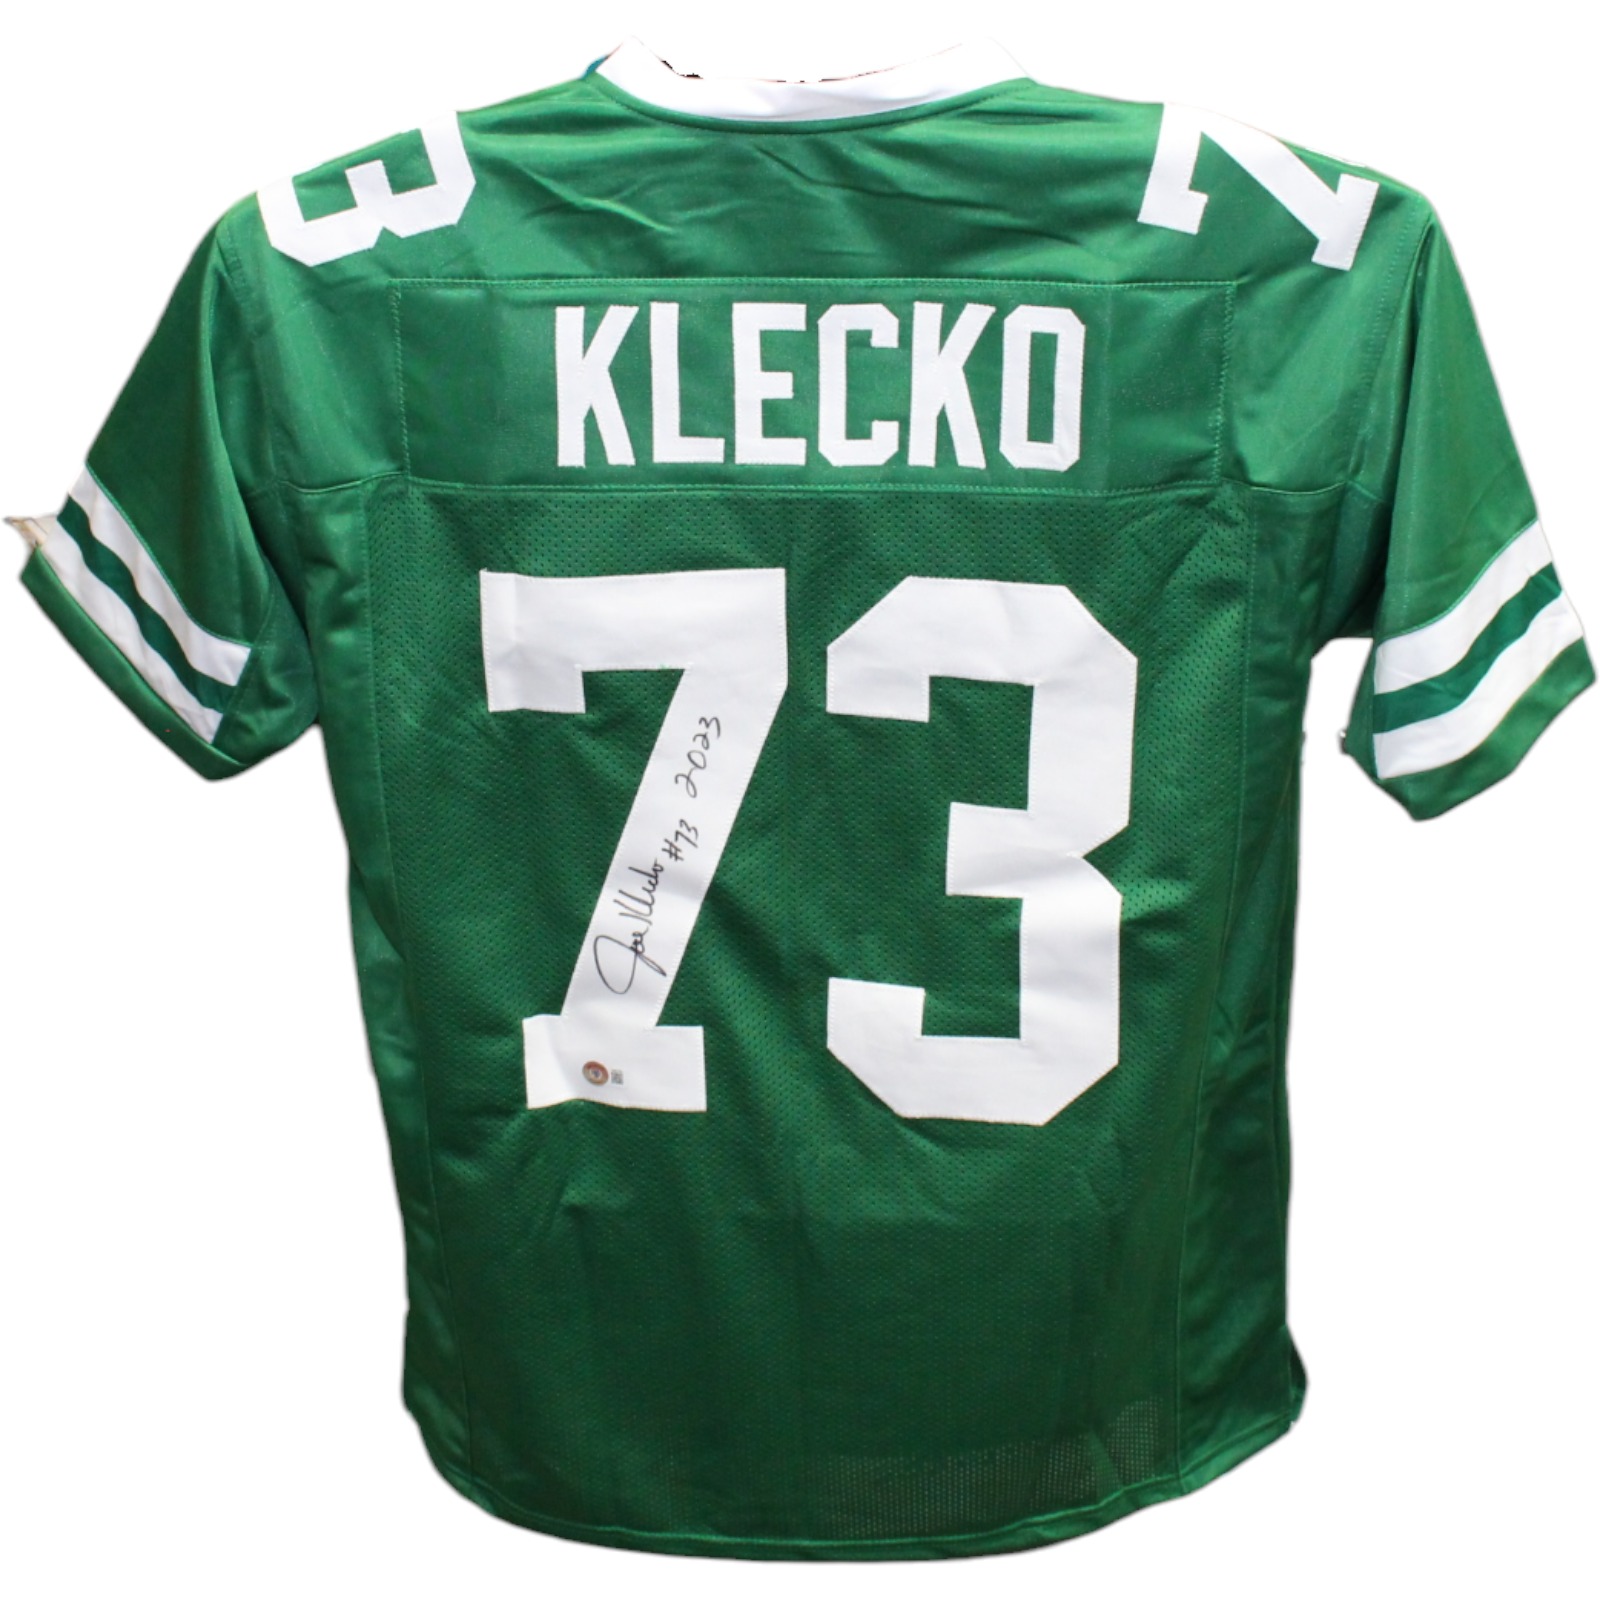 Joe Klecko Autographed/Signed Pro Style Green Jersey Beckett